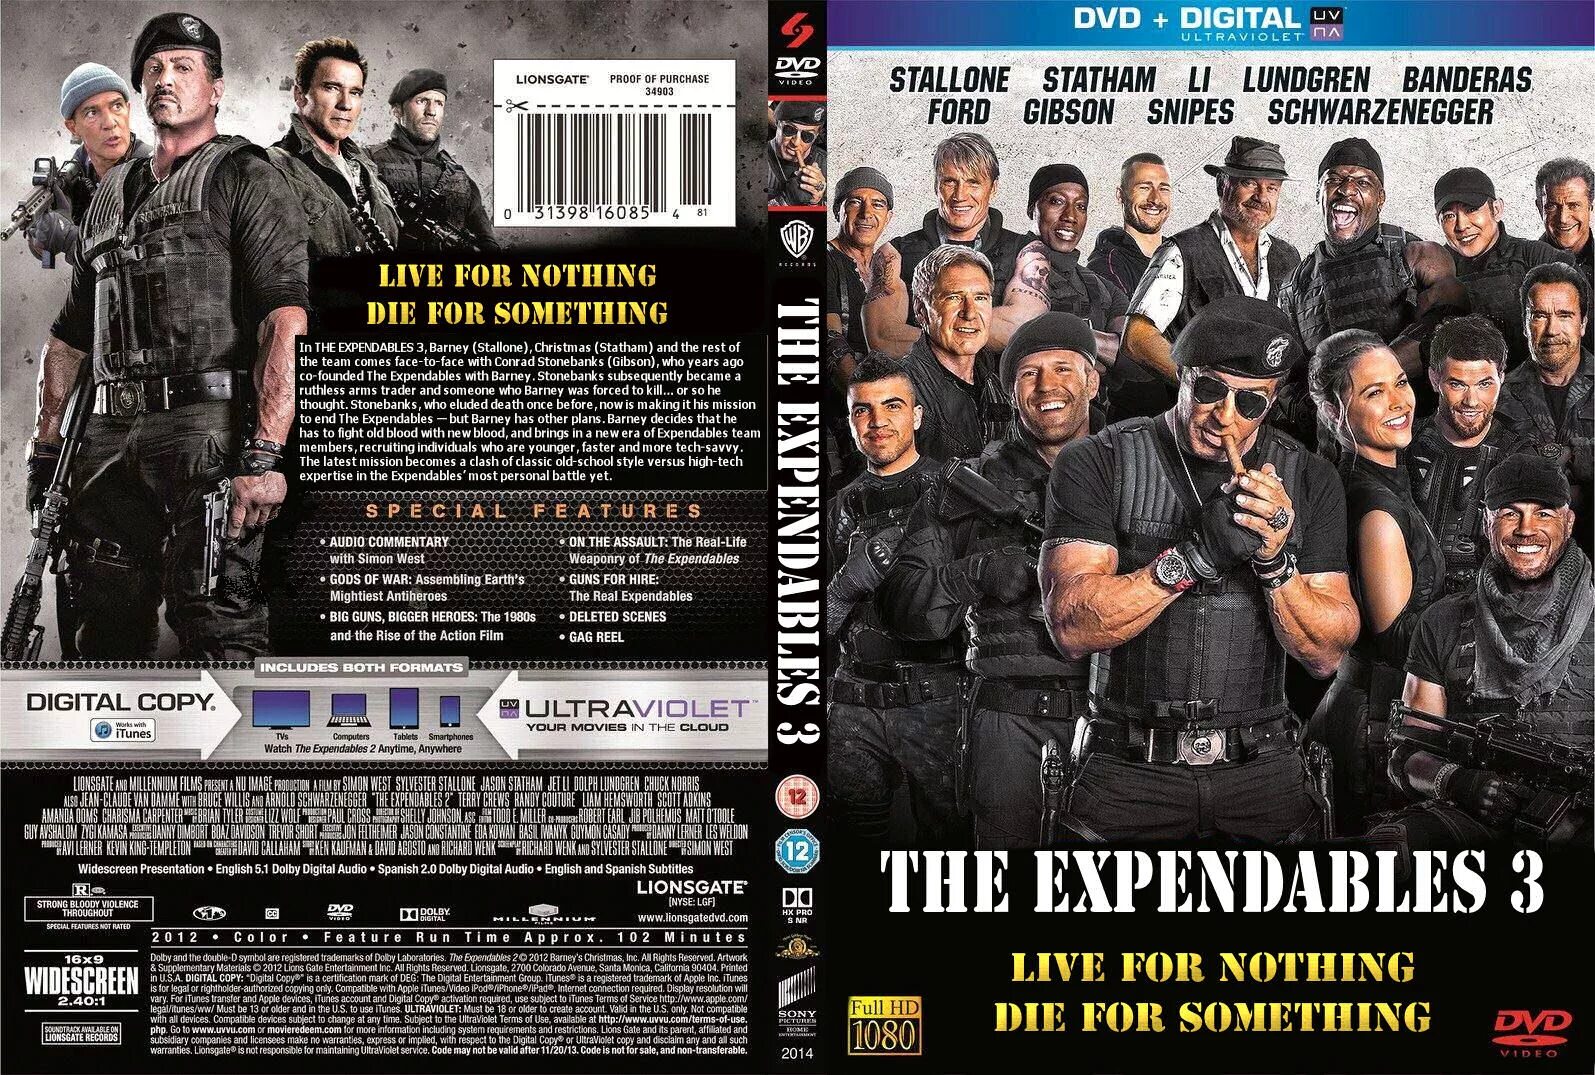 The Expendables 3 обложка DVD. The Expendables 3 DVD Cover. The Expendables постеры. The Expendables 3 2014. Читать книги андрея боярского неудержимый 5